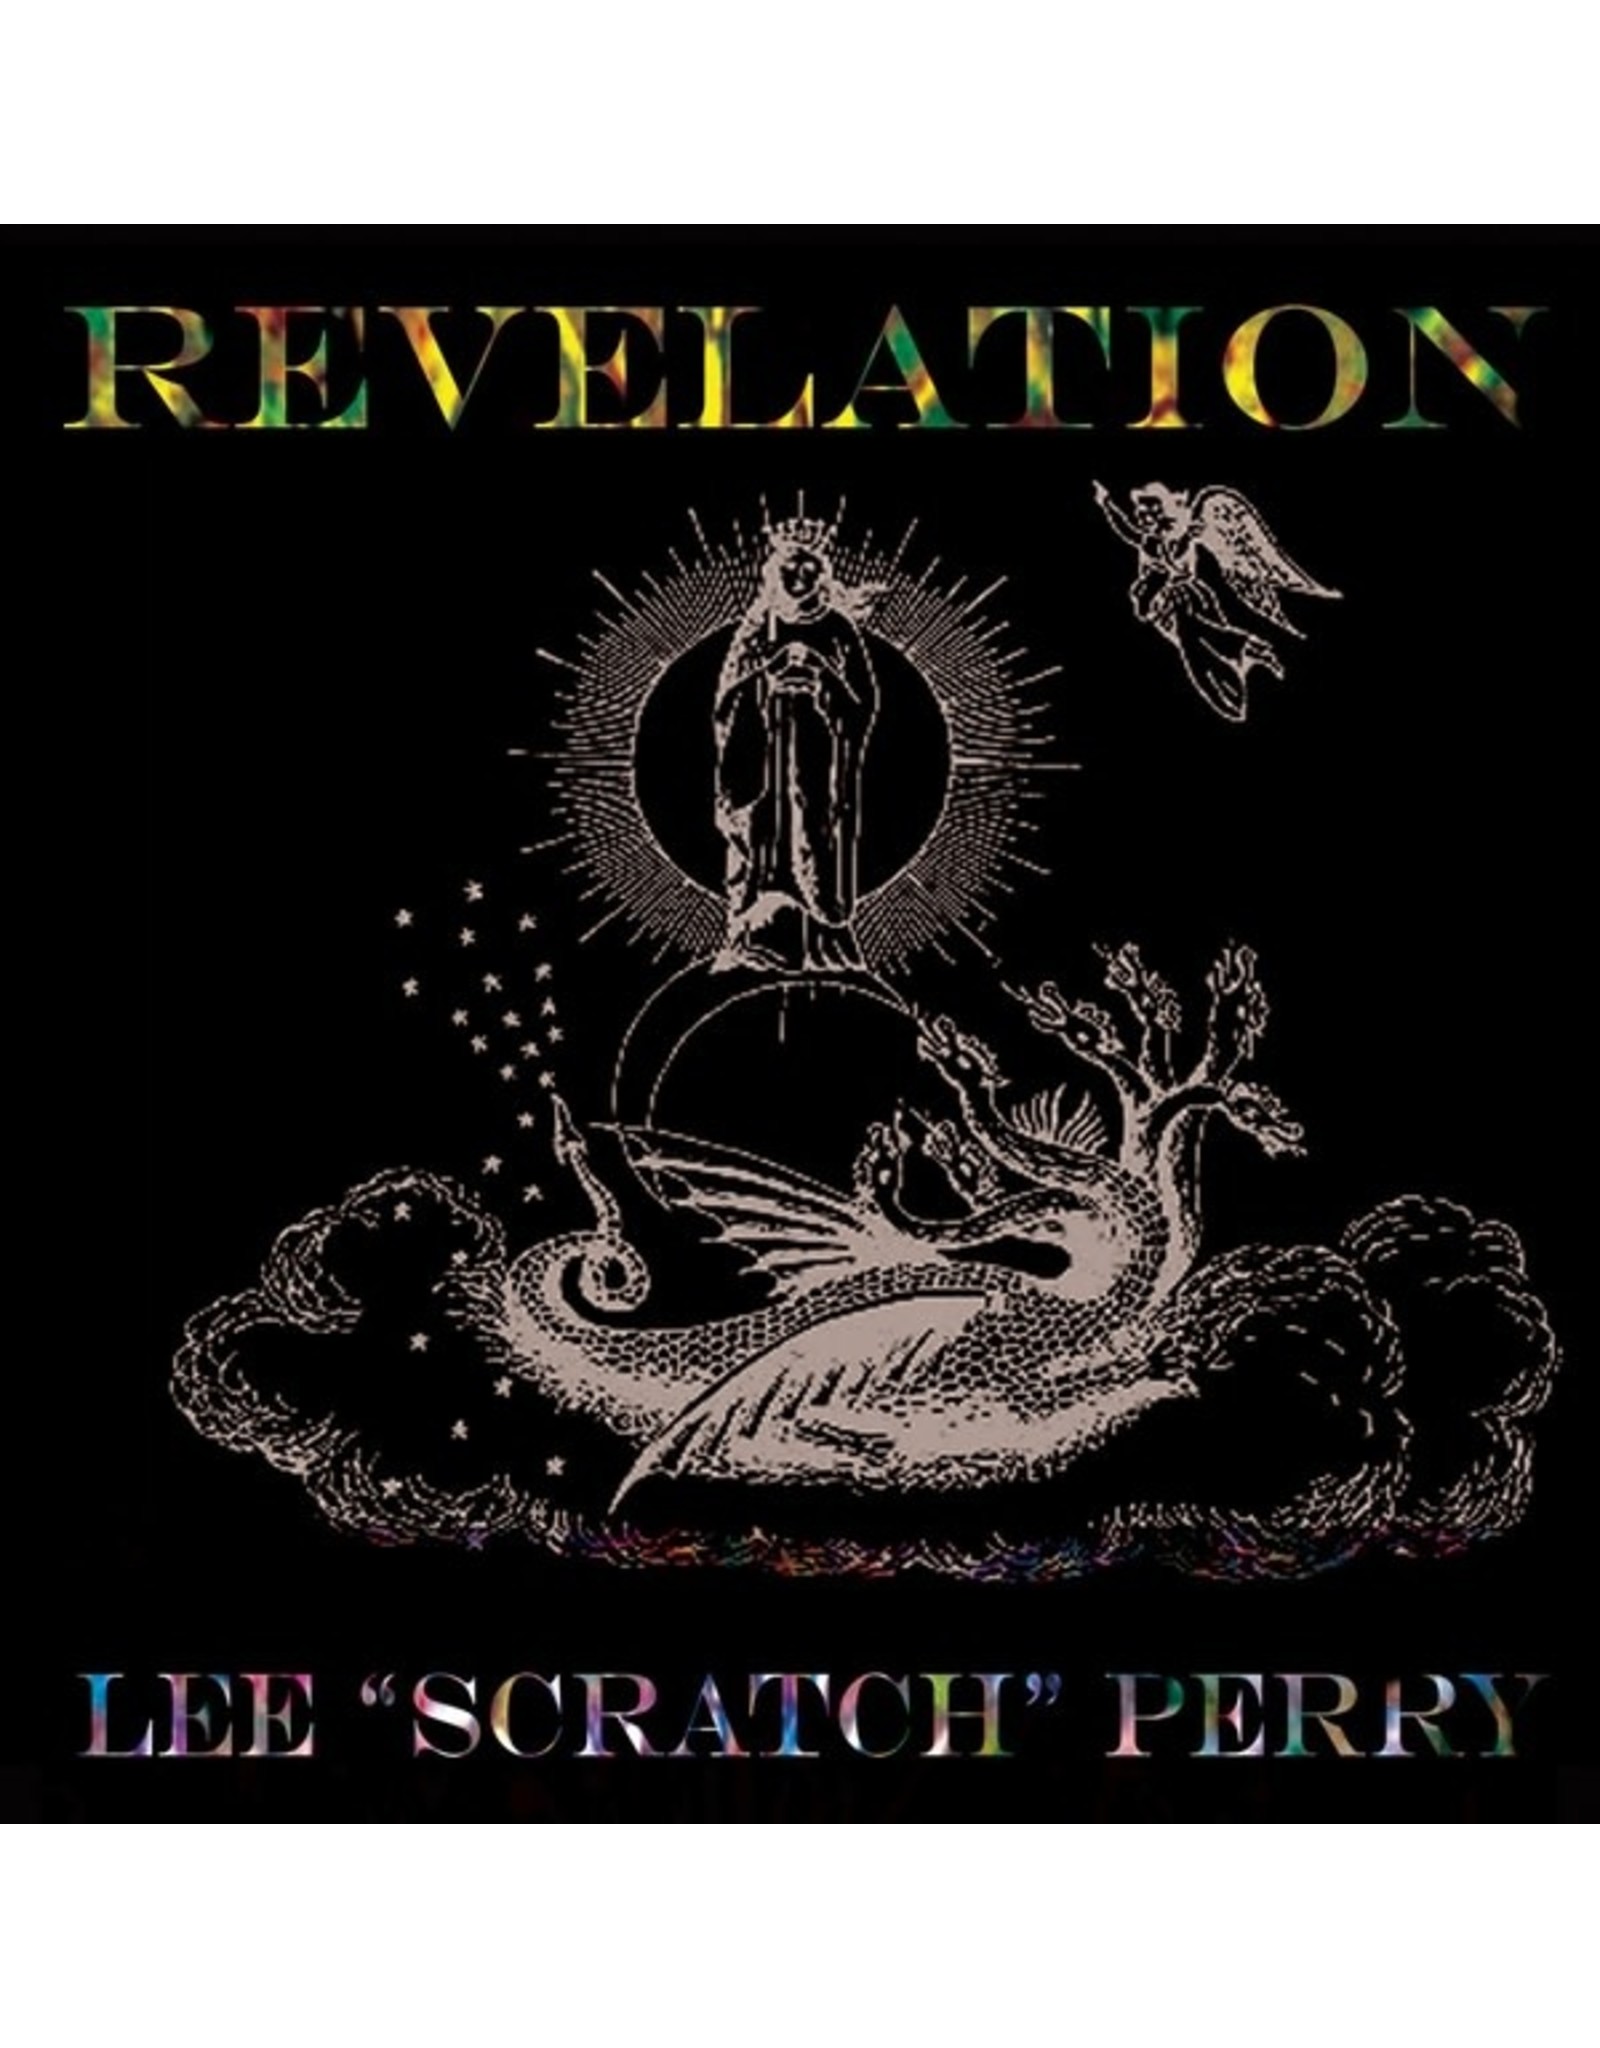 New Vinyl Lee "Scratch" Perry - Revelation LP